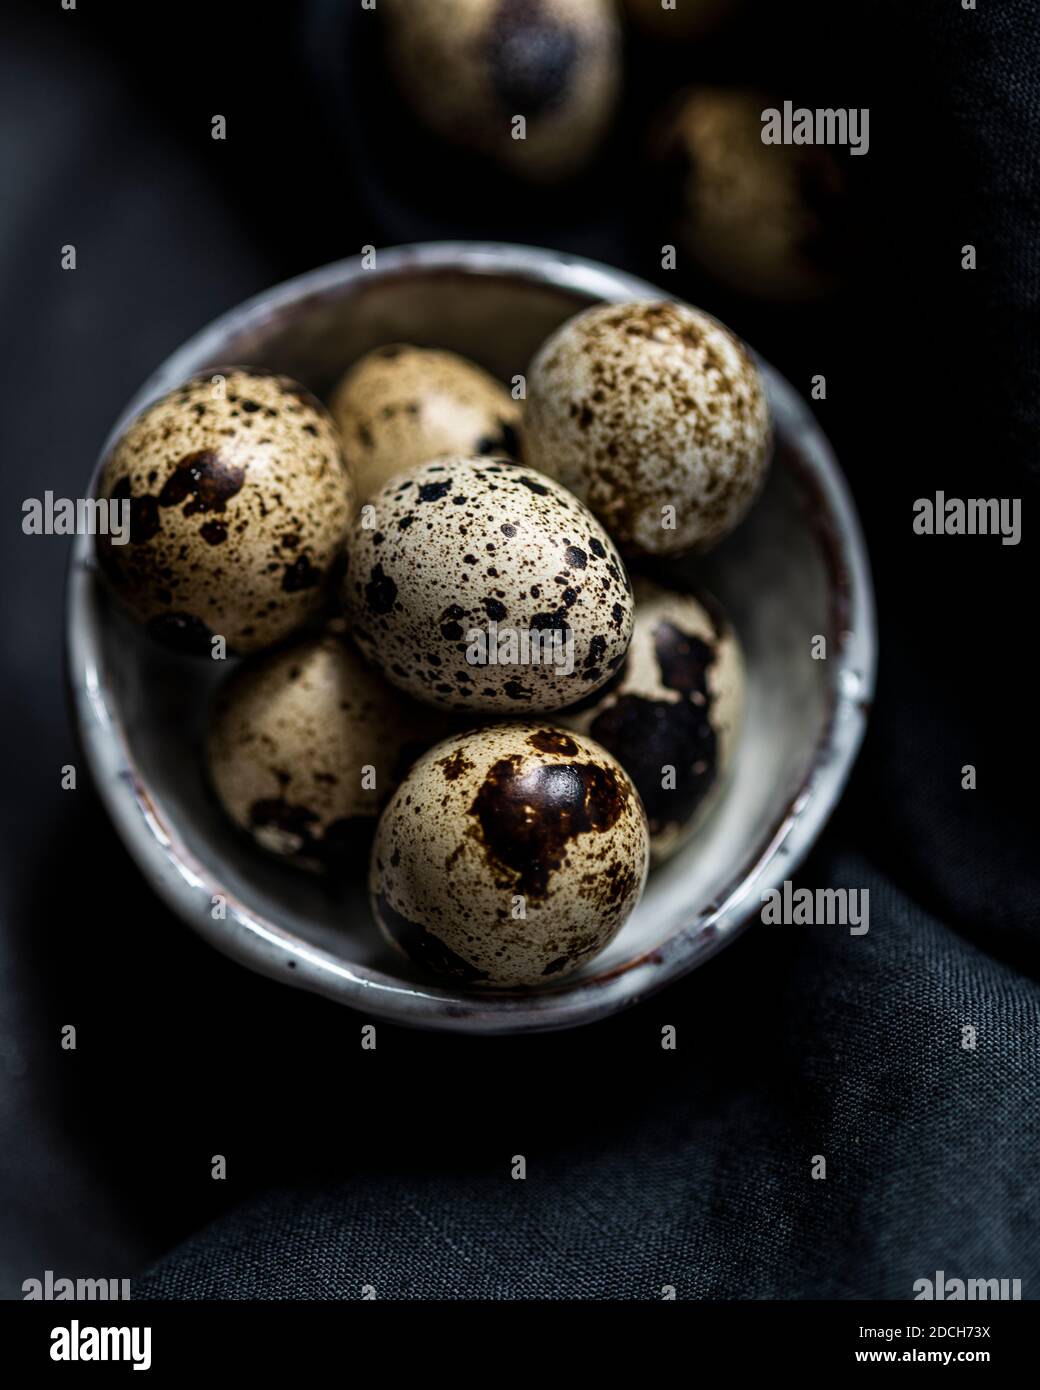 Quail eggs in white bowl on black backdrop, quail eggs, pile of quails eggs in bowl, speckled eggs, speckled eggs in bowl, quail eggs dark background Stock Photo